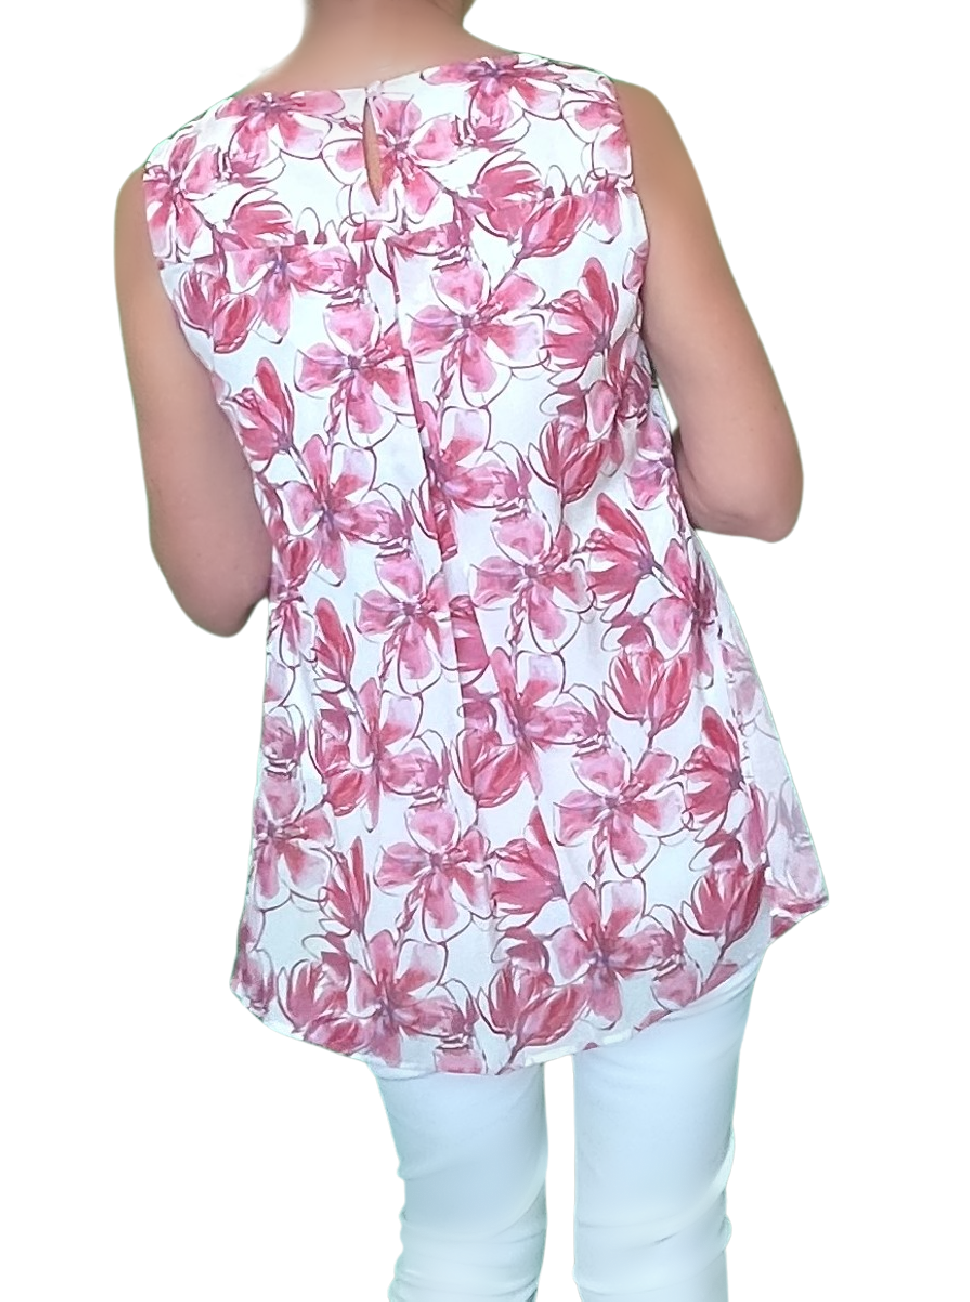 Side Slit Sleeveless Top - Raspberry Floral Print